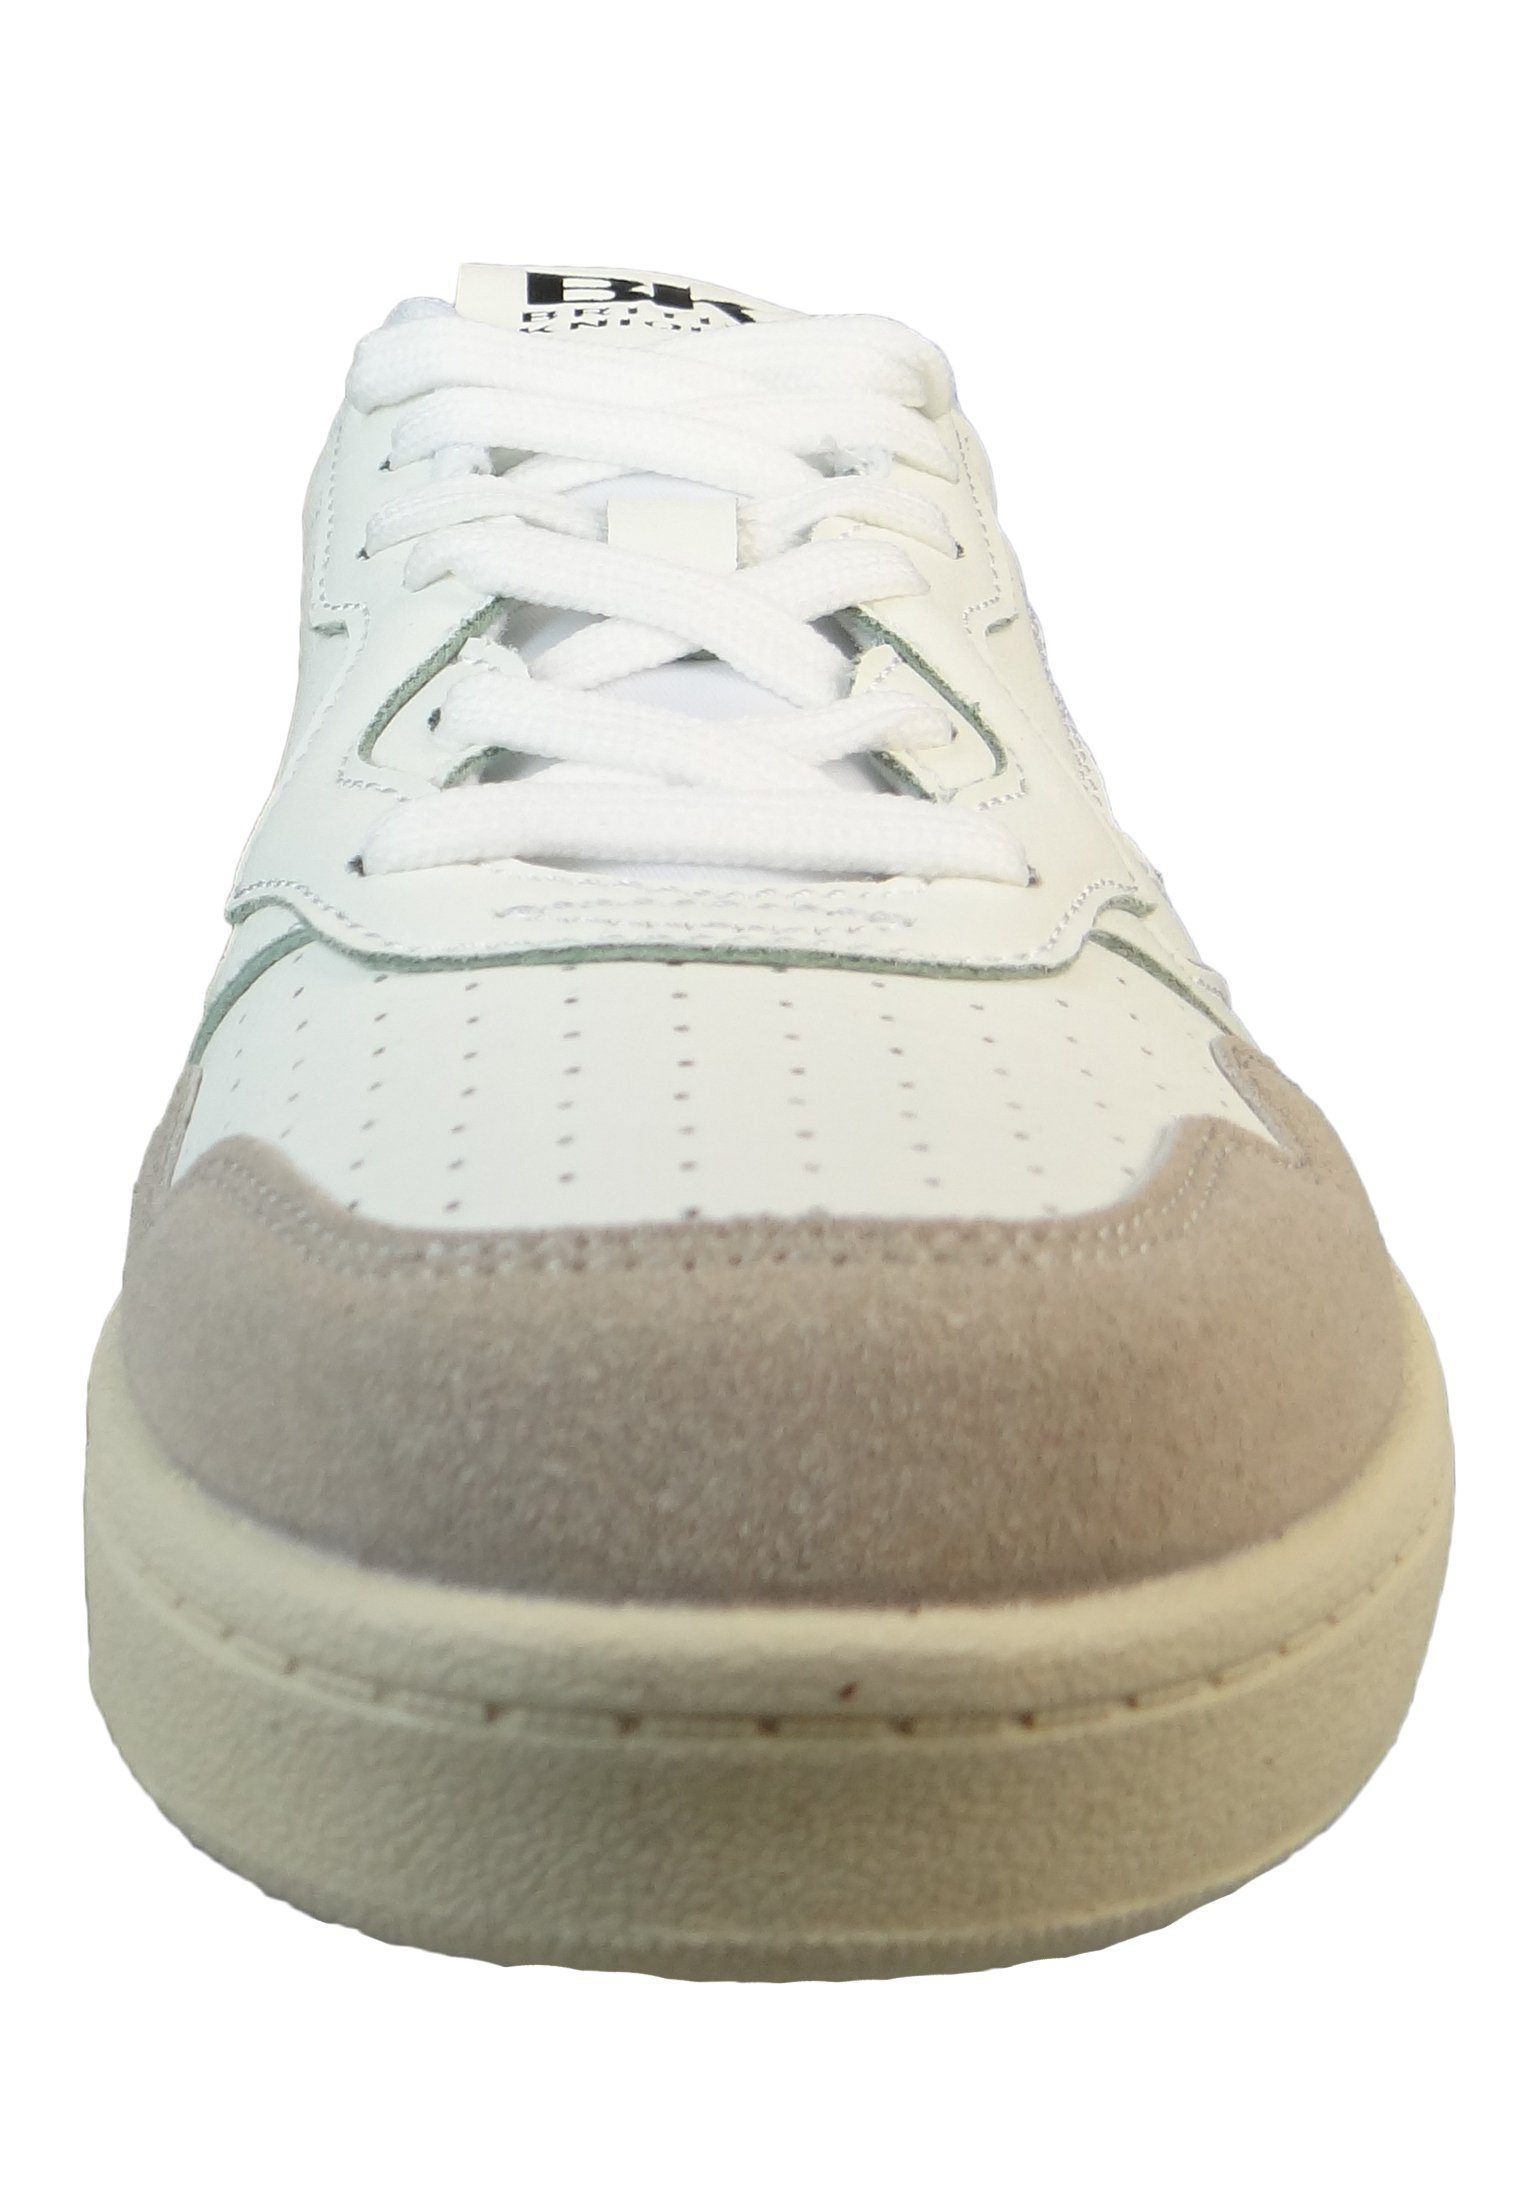 GREEN British 04 (02001030) Knights B51-3618 Sneaker White/Green WHITE/